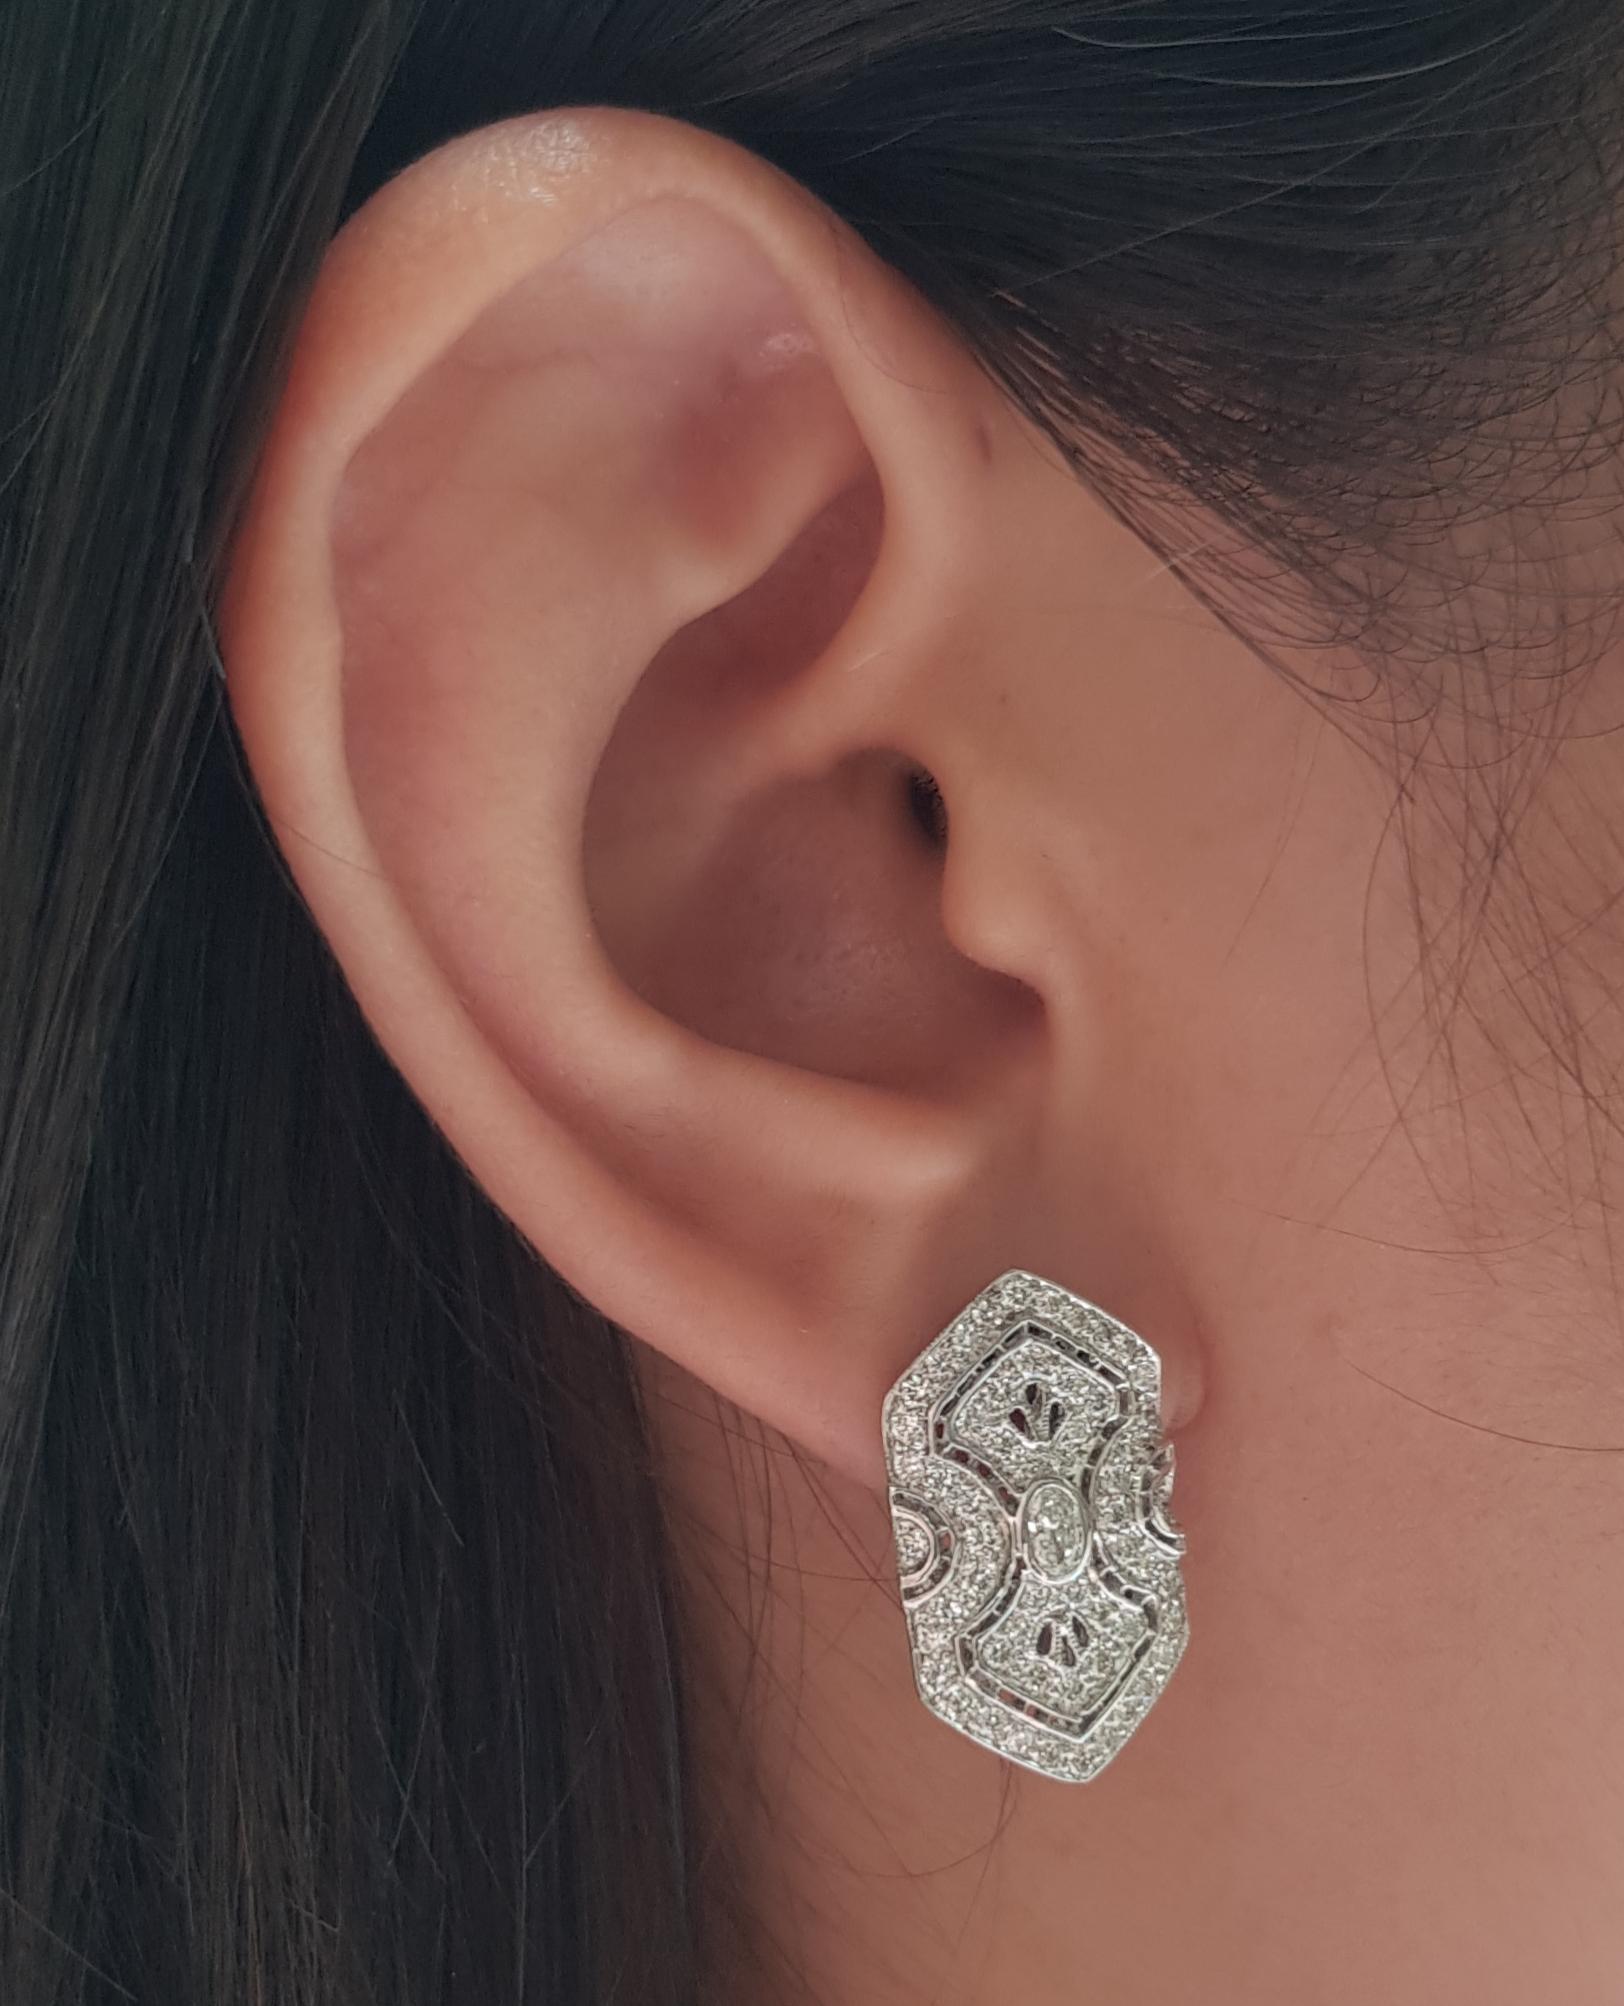 Diamond 1.66 carats Earrings set in 18 Karat White Gold Settings

Width: 1.3 cm 
Length: 2.3 cm
Total Weight: 10.92 grams

